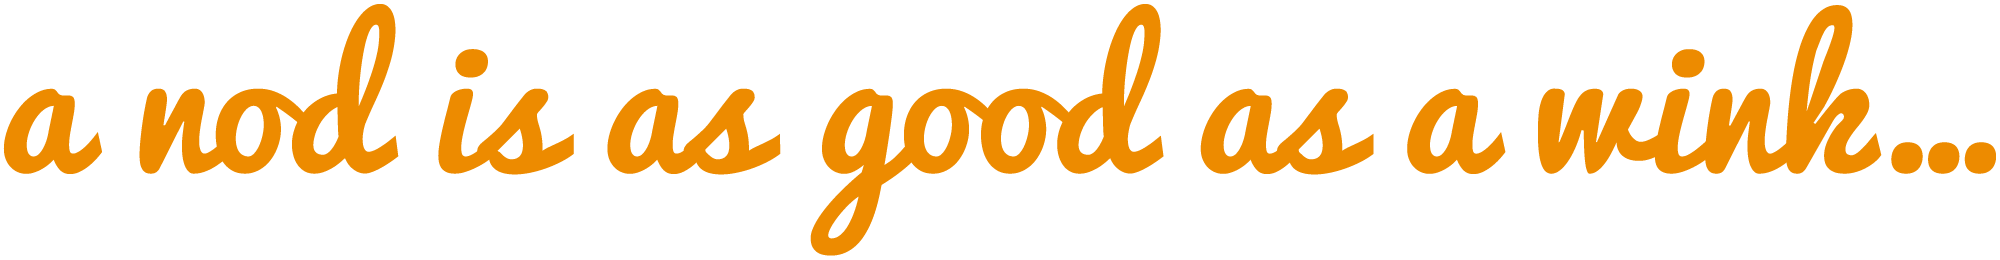 a nod is as good as a wink logo